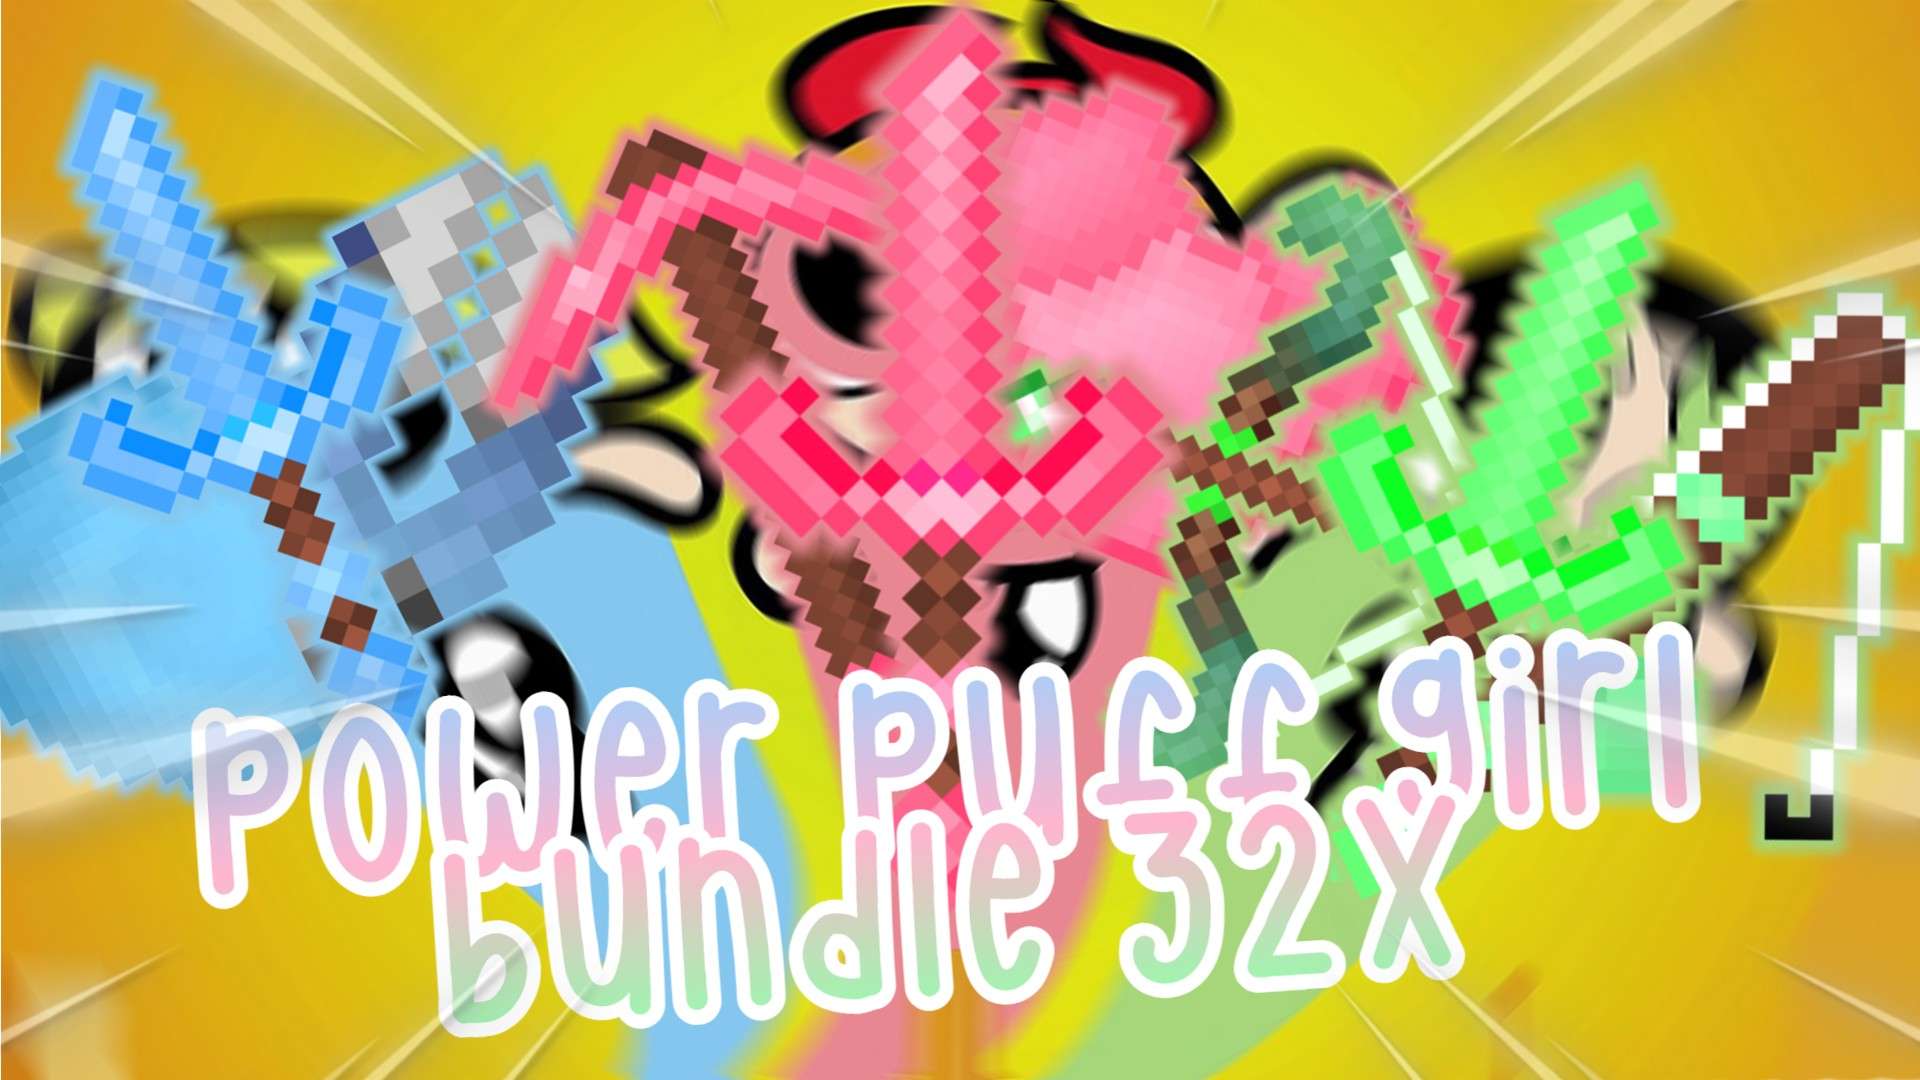 Buttercup (powerpuff girls bundle) 32x by veebri on PvPRP